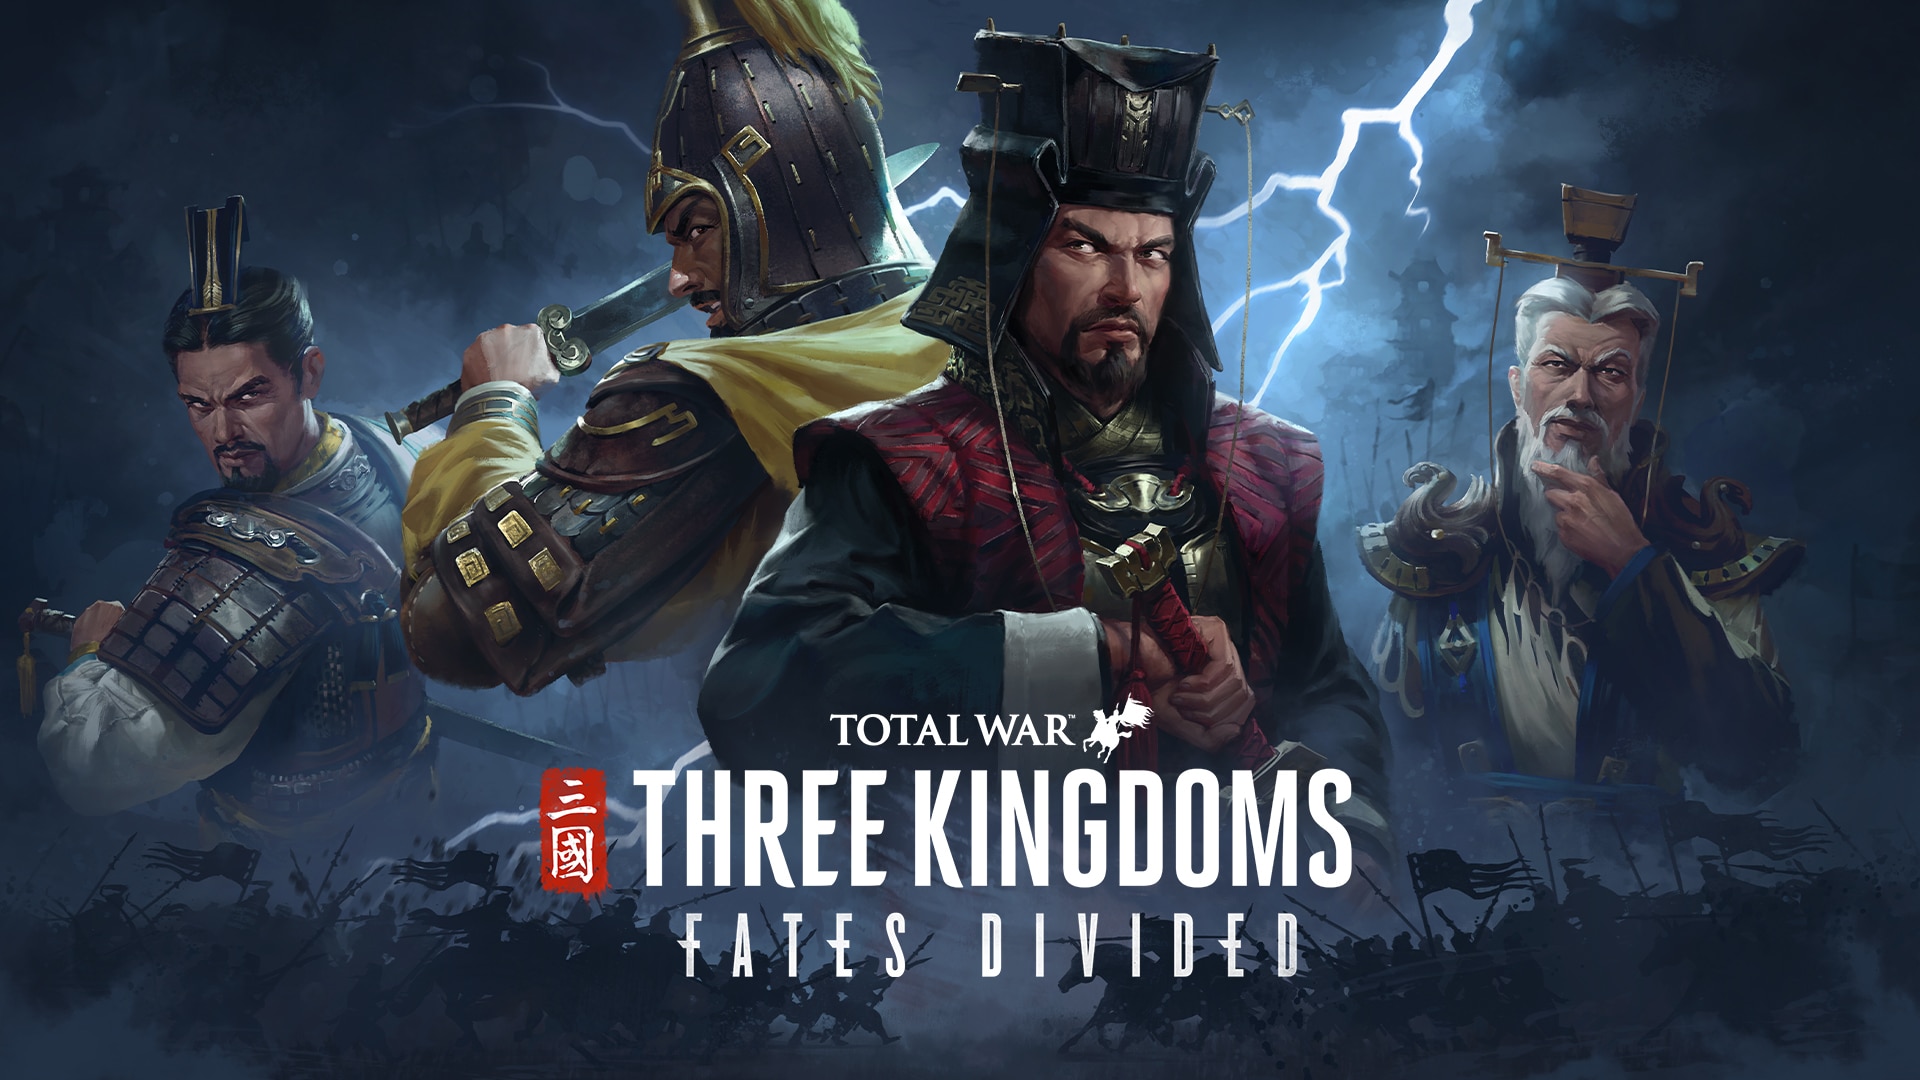 Total War THREE KINGDOMS – Fates Divided ya está disponible, GamersRD